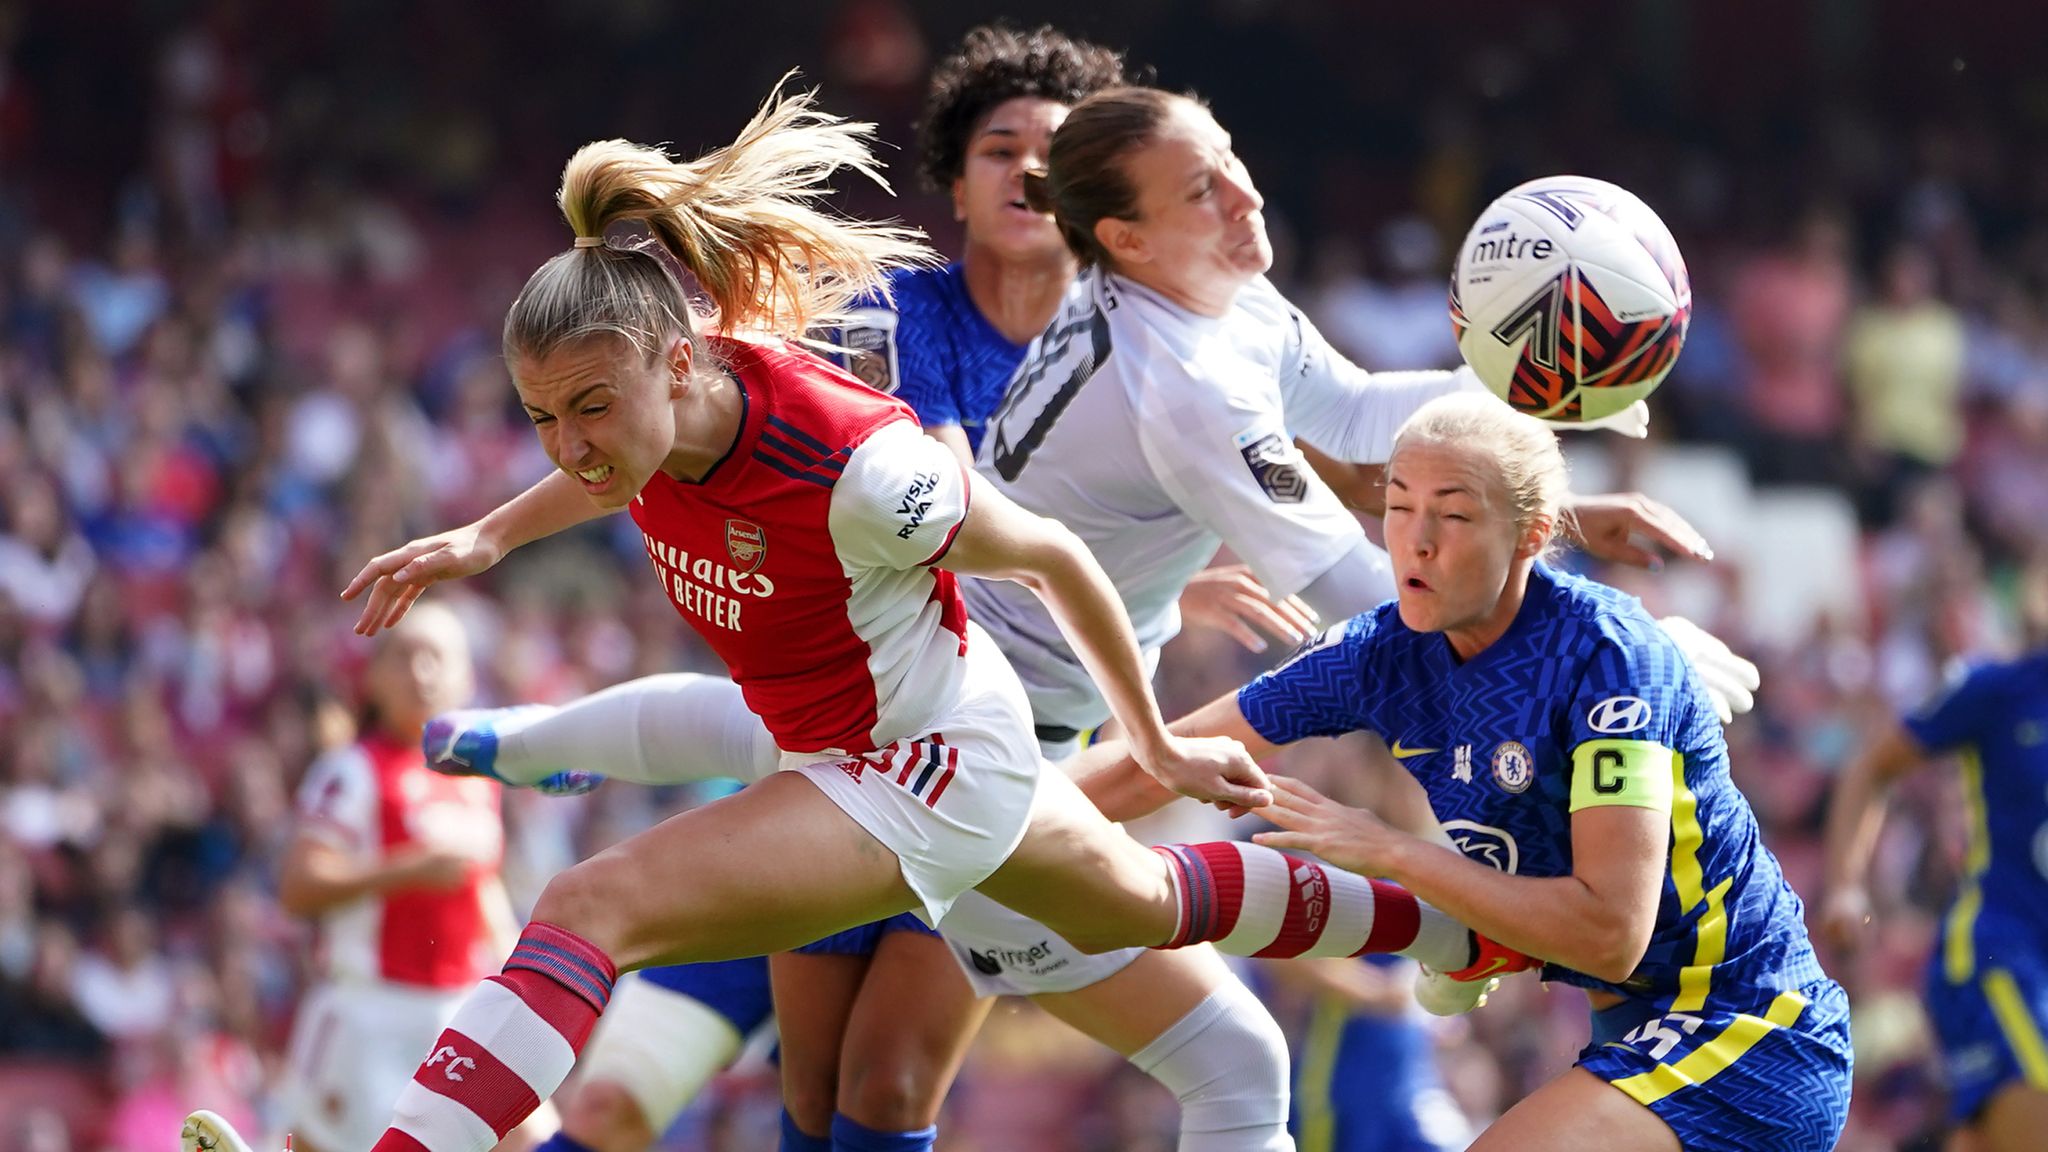 Women's Honours, Arsenal Women, News